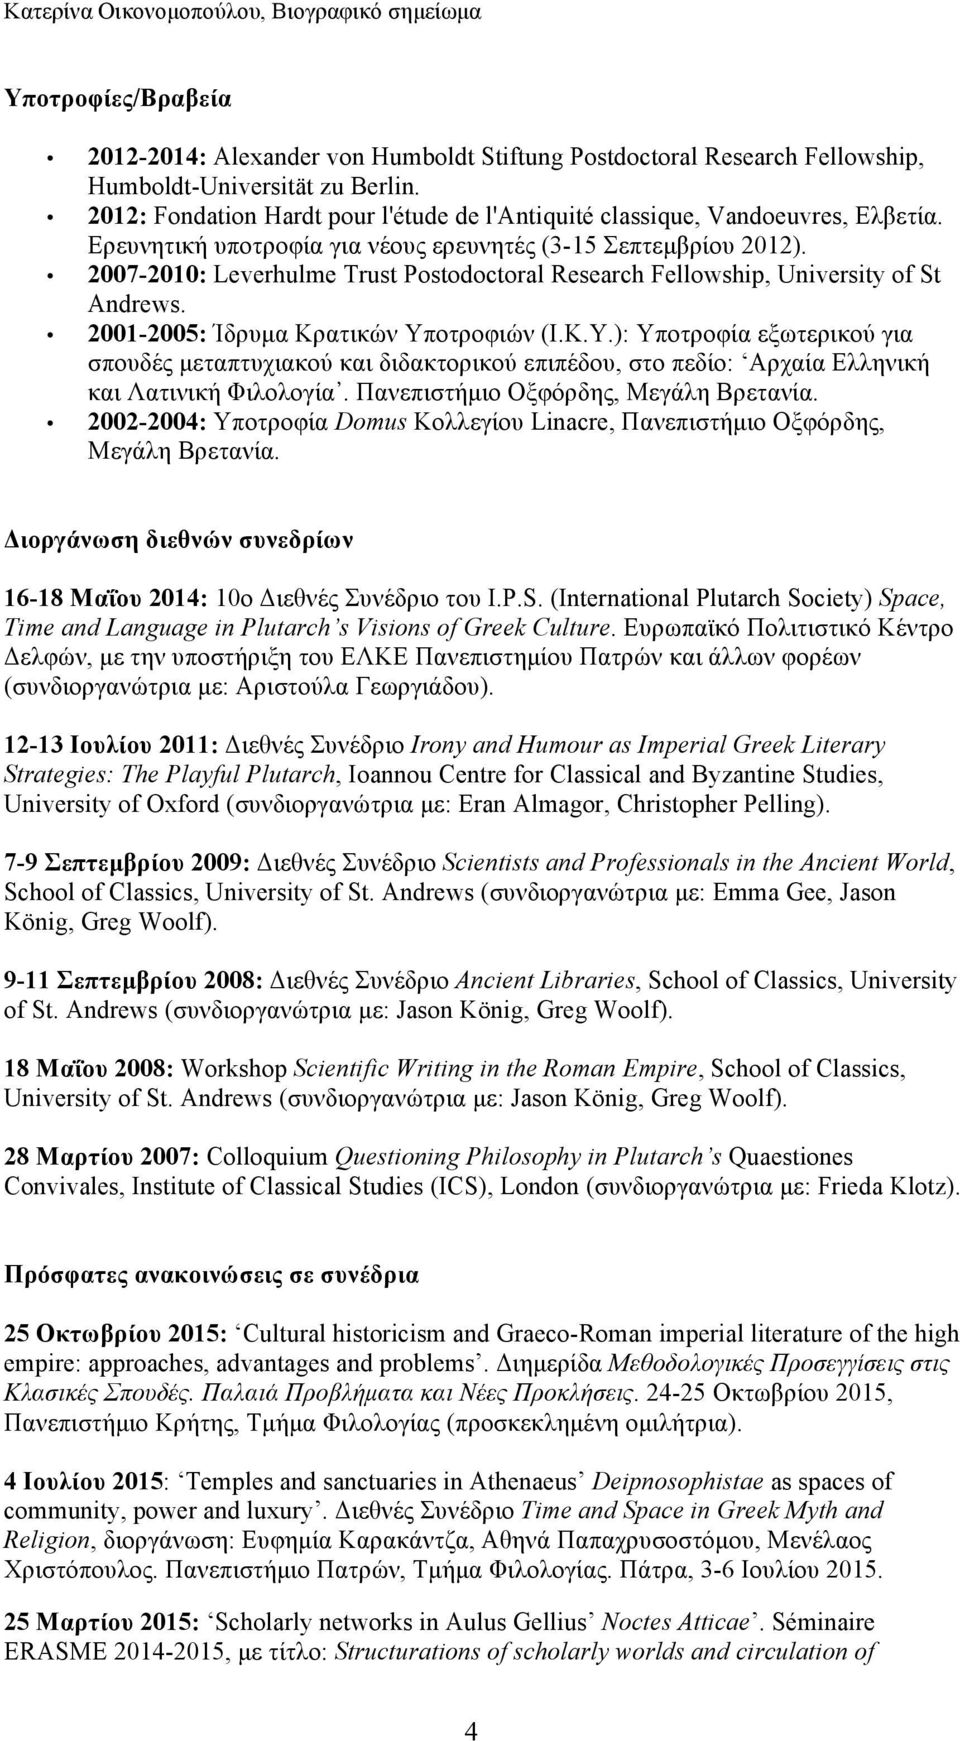 2007-2010: Leverhulme Trust Postodoctoral Research Fellowship, University of St Andrews. 2001-2005: Ίδρυµα Κρατικών Υπ